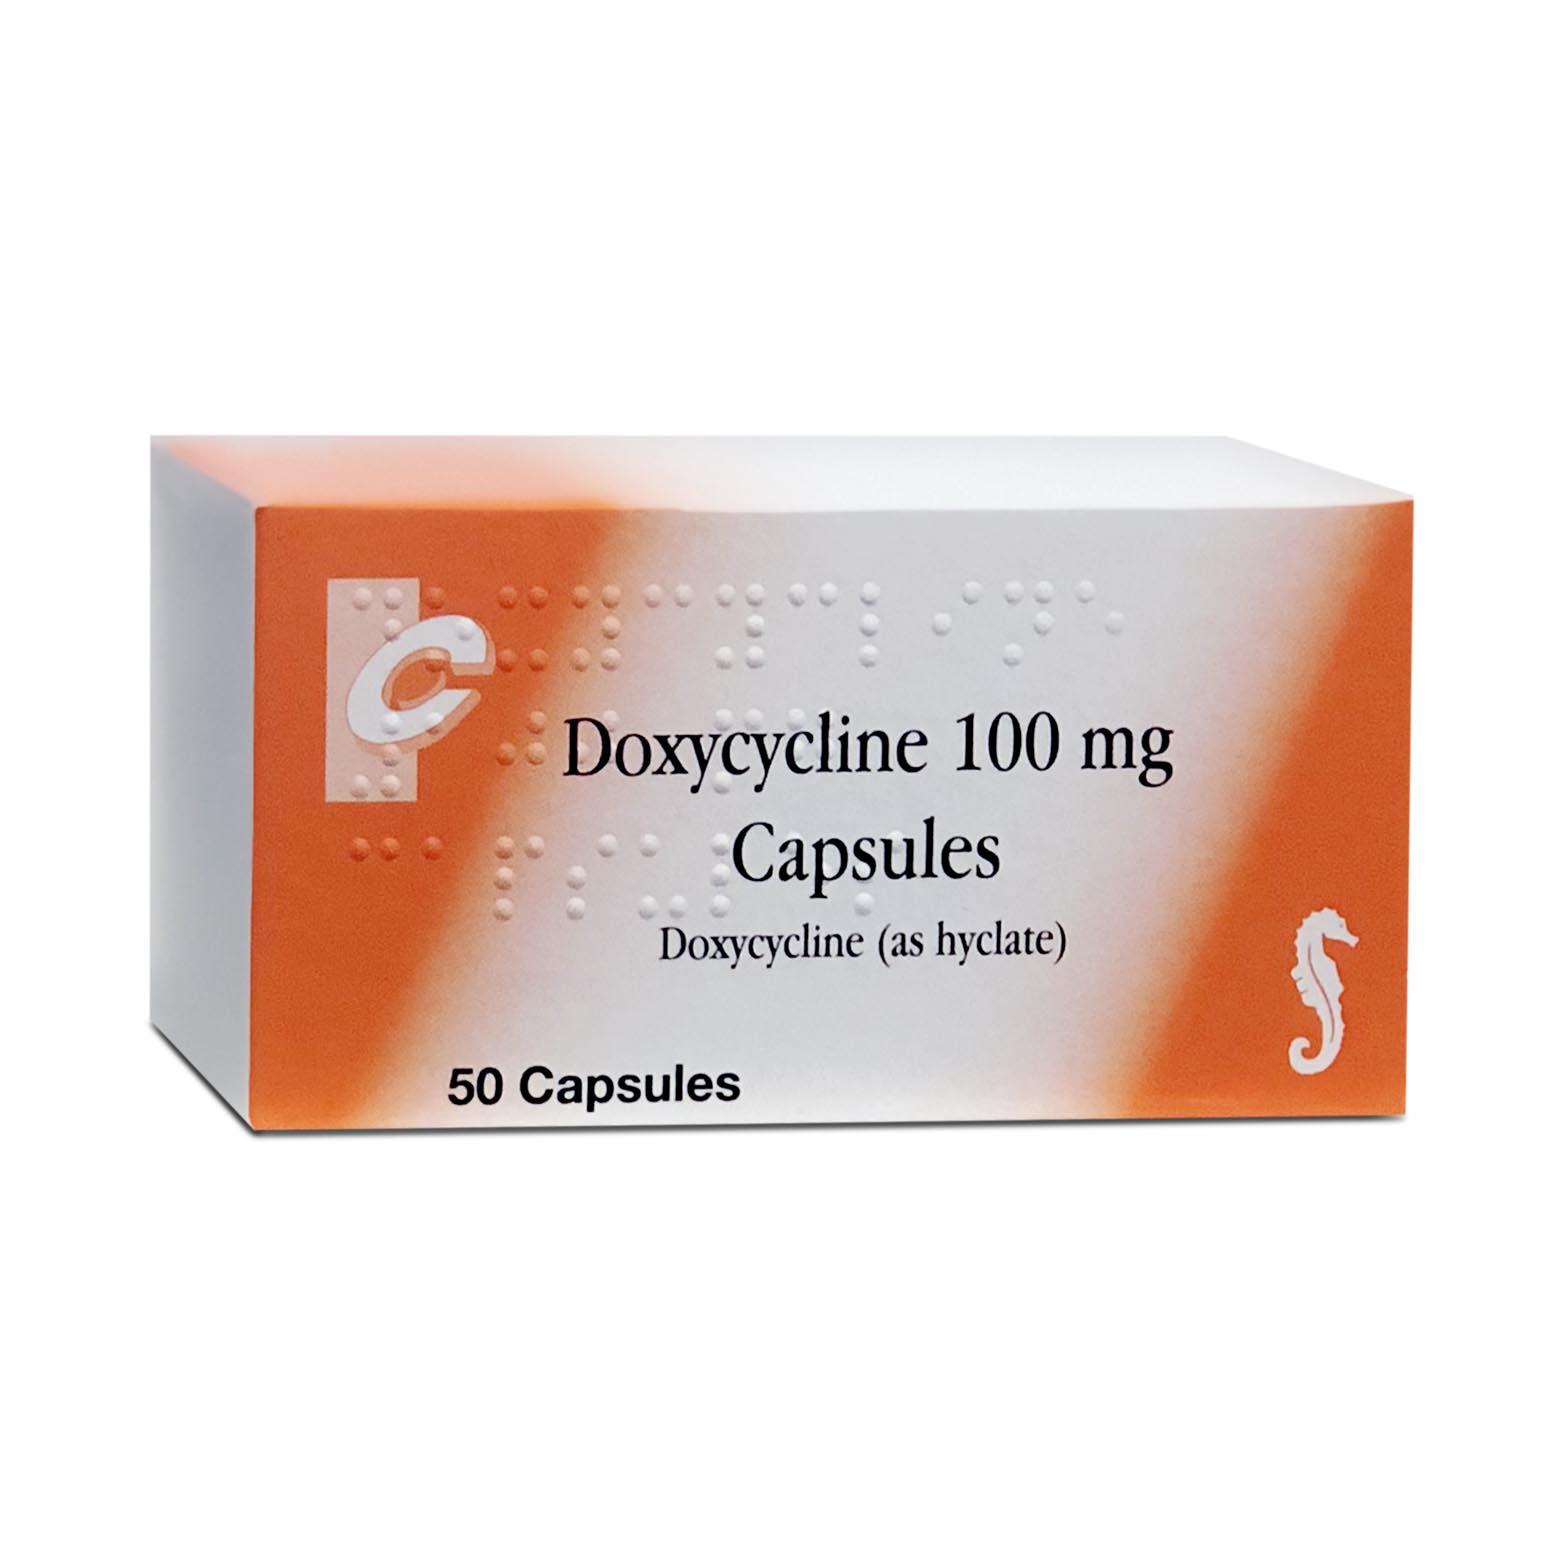 Doxycycline 100mg 50 capsules Chanel (orange box)